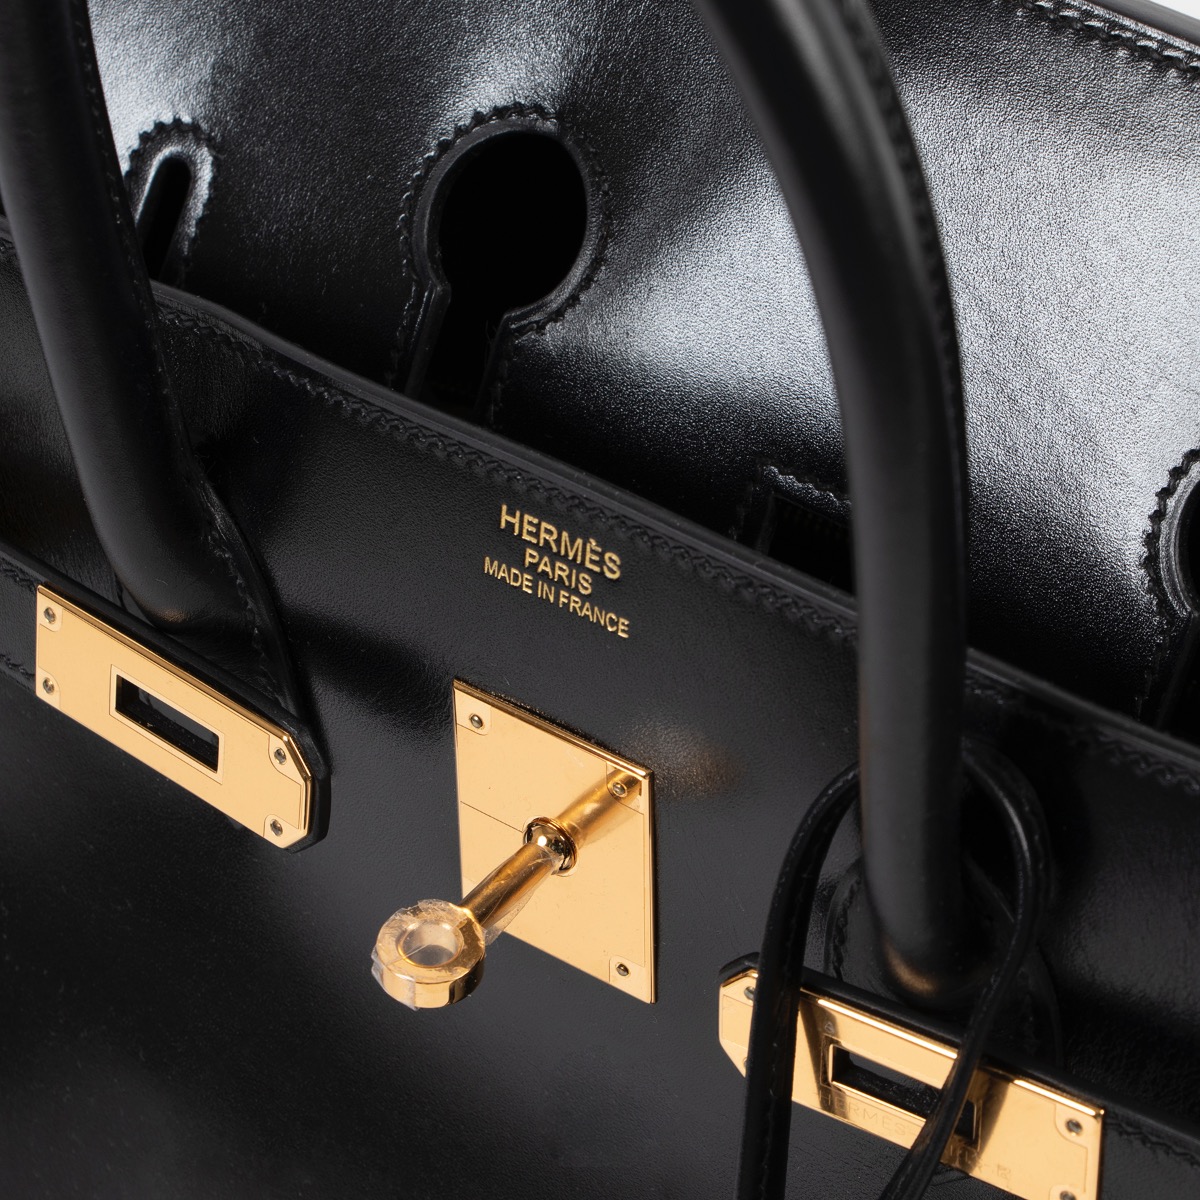 Hermès Birkin 35 in Black Box Calf Leather with 24 karat gold